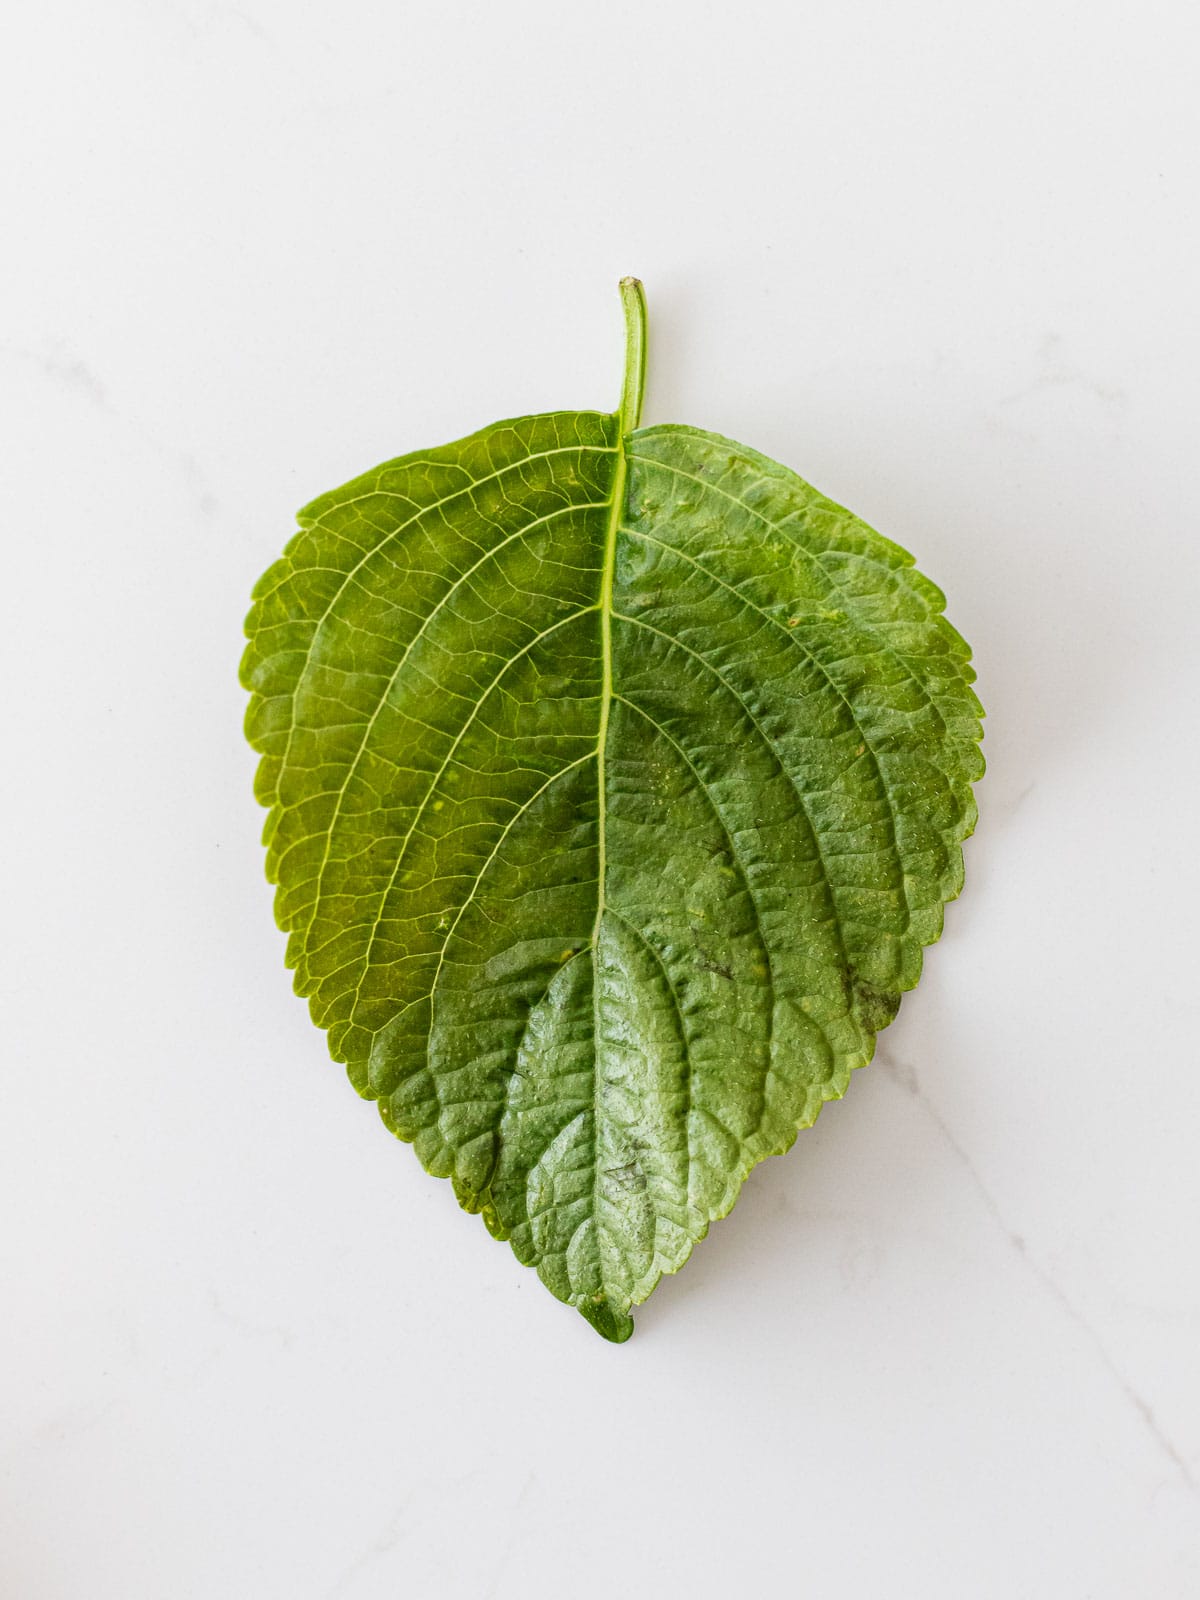 close up of a Korean perilla leaf